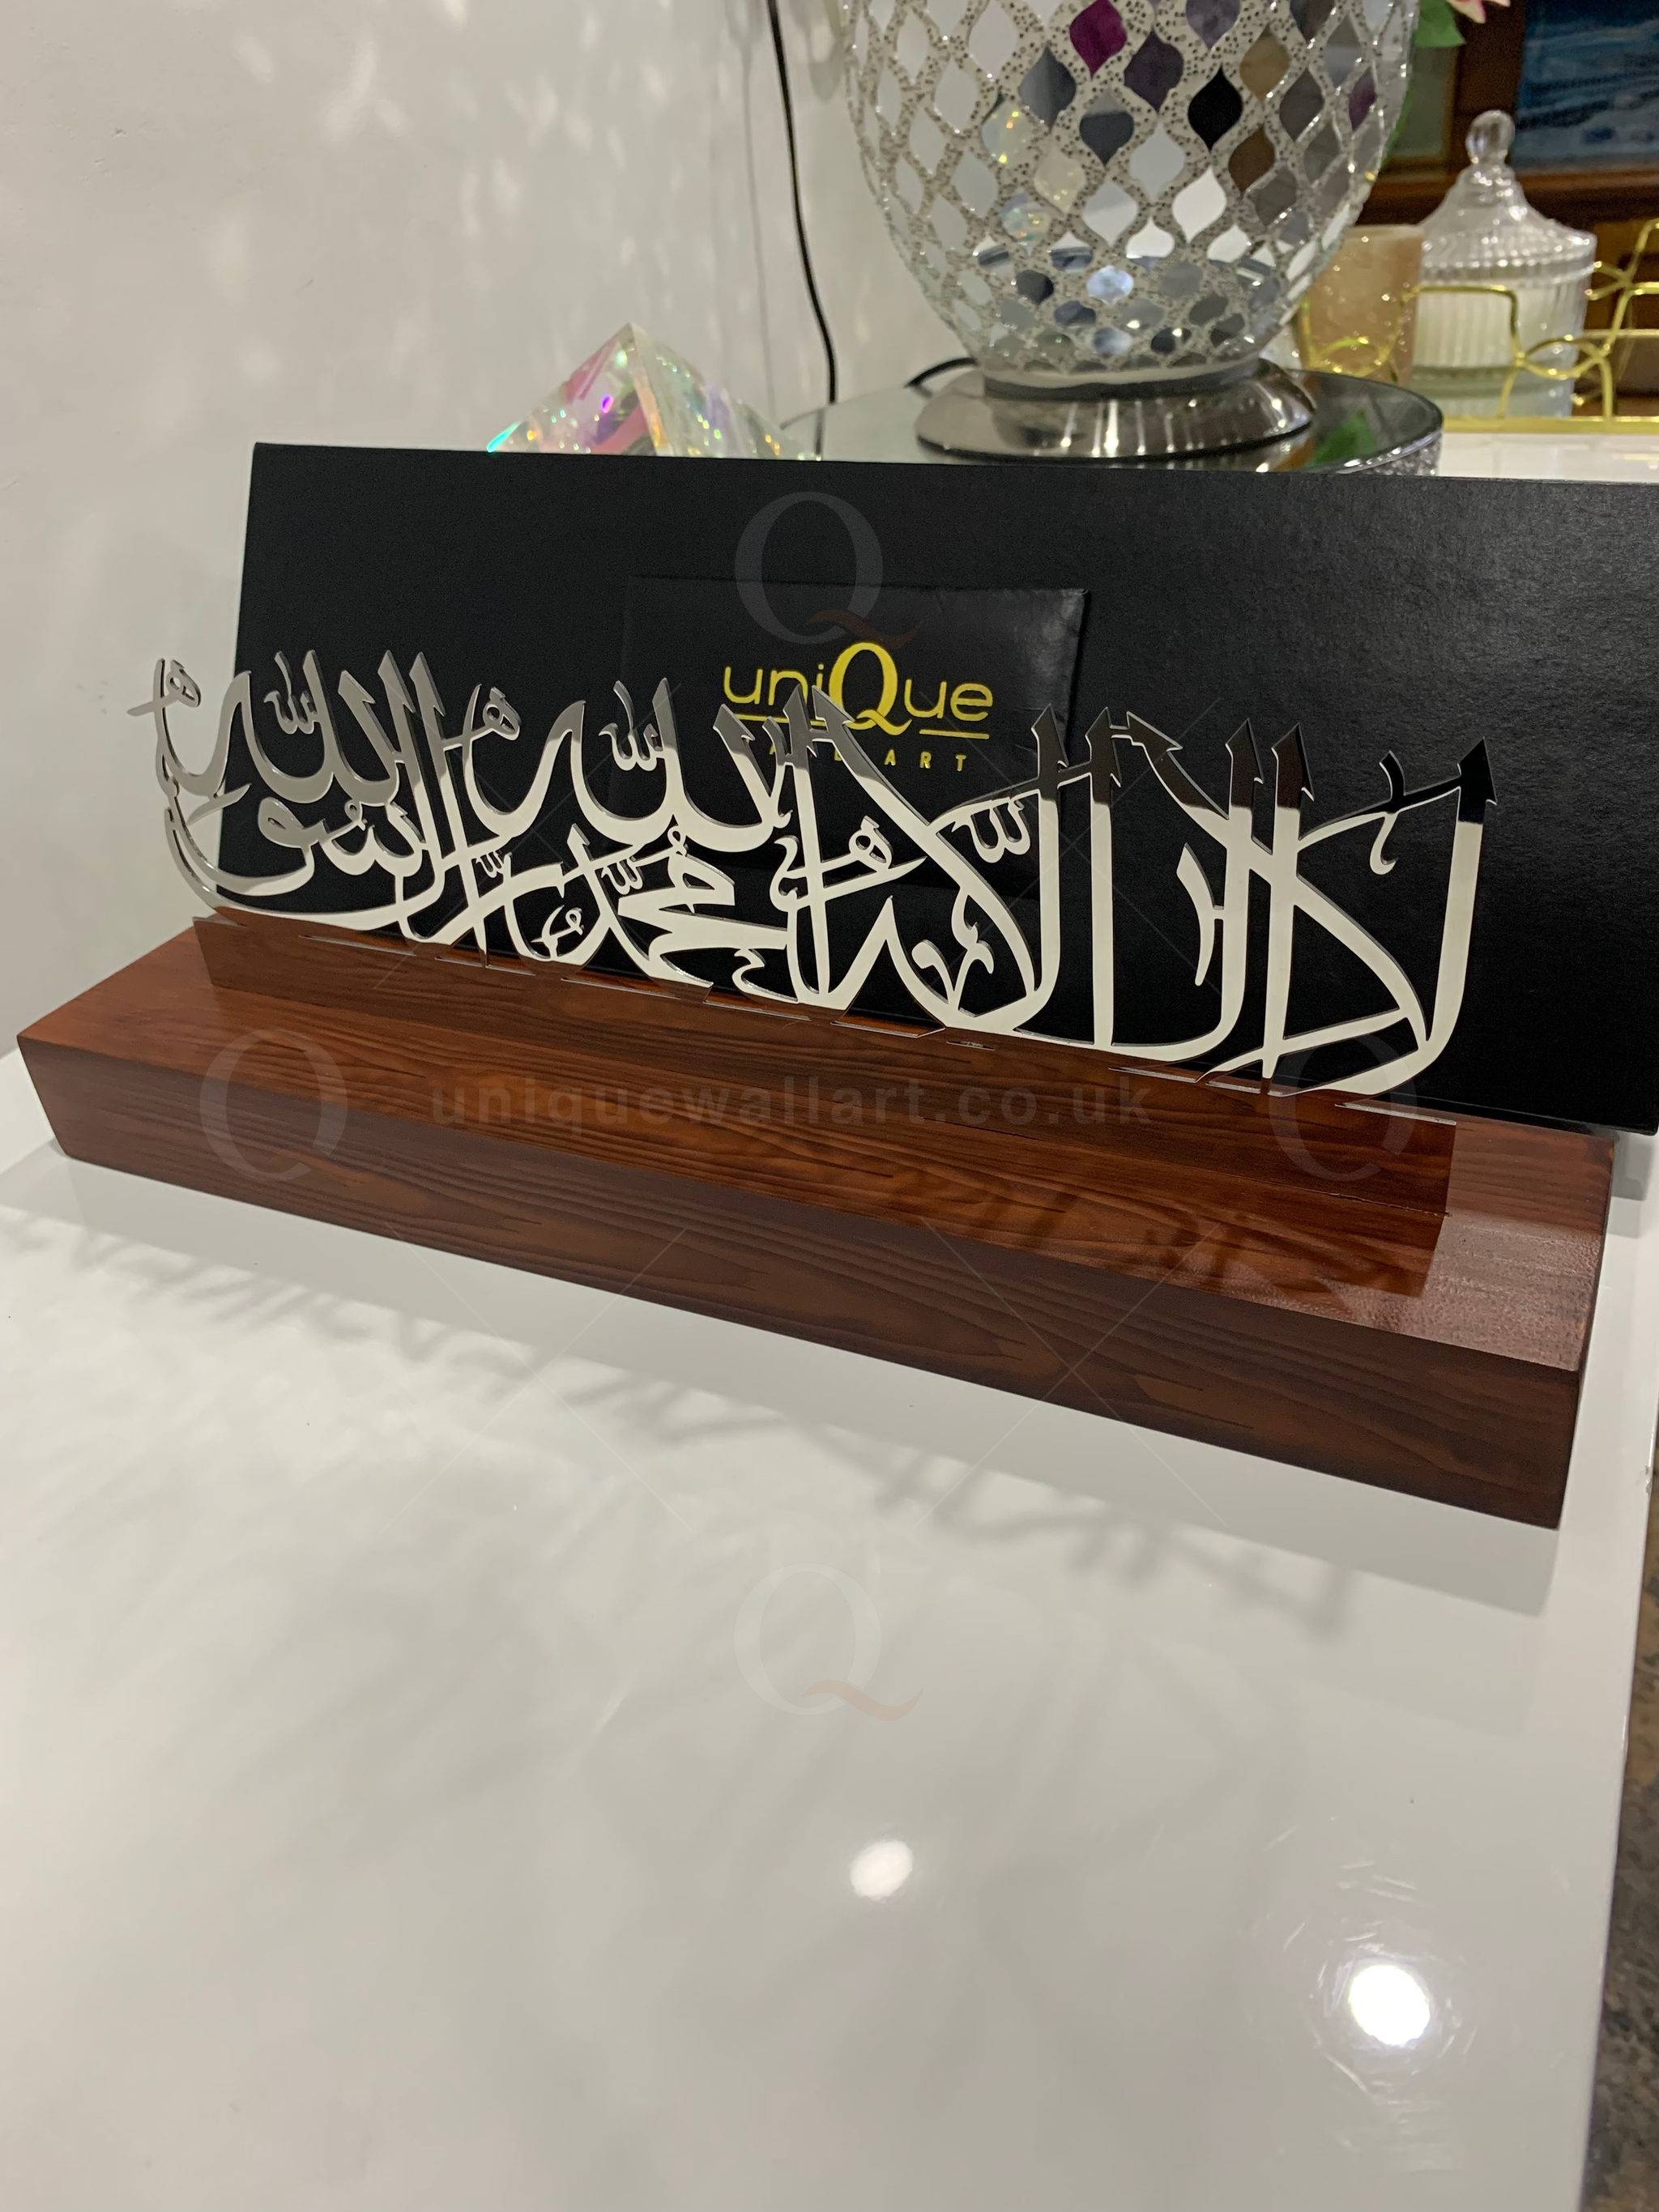 Shahada Kalima with wooden base Islamic Table Decor centrepiece Art